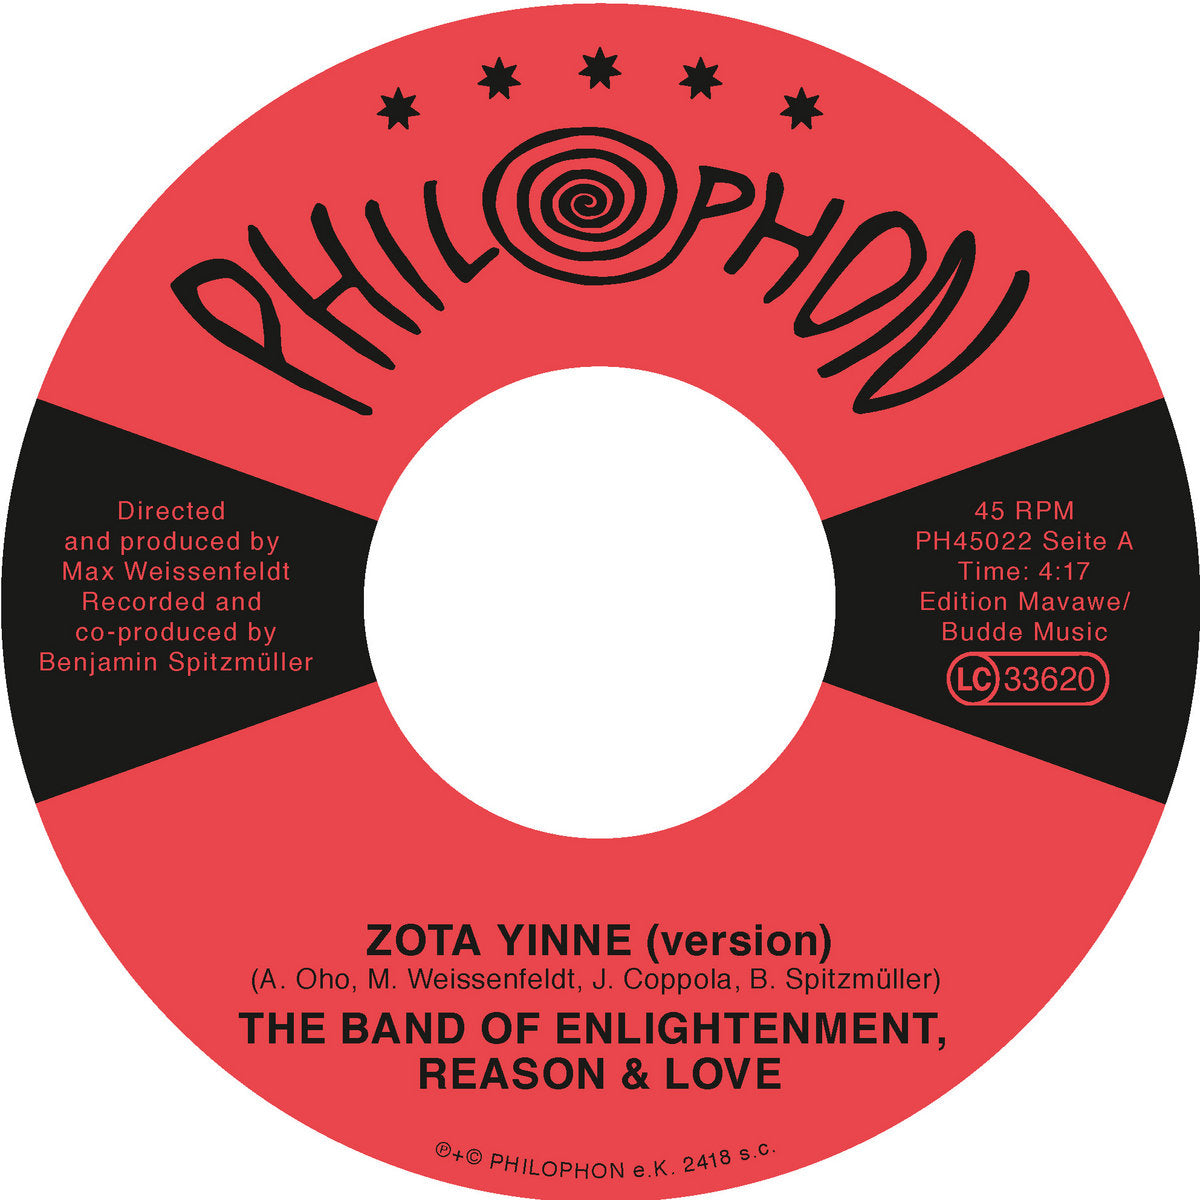 The Band of Enlightenment, Reason & Love - Zota Yinne (version)